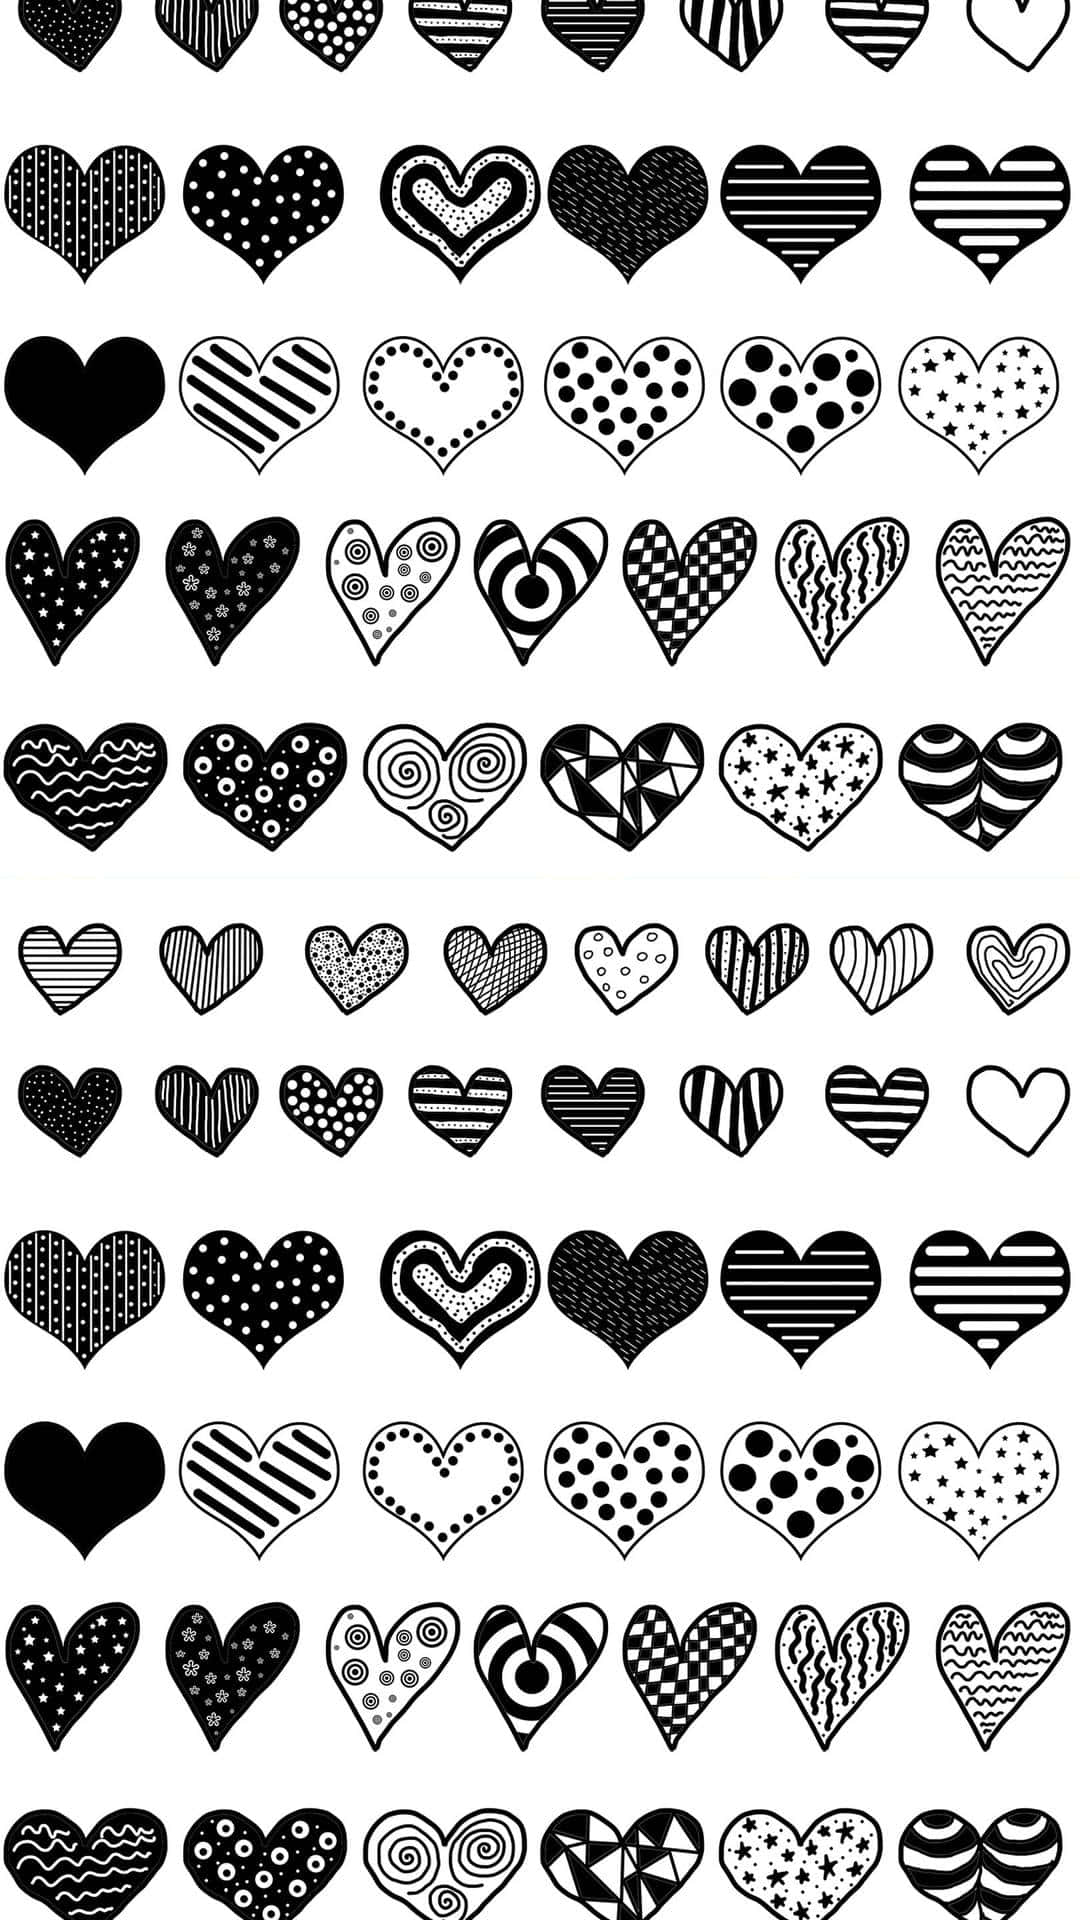 "Monochrome Love: Black and White Heart Background"